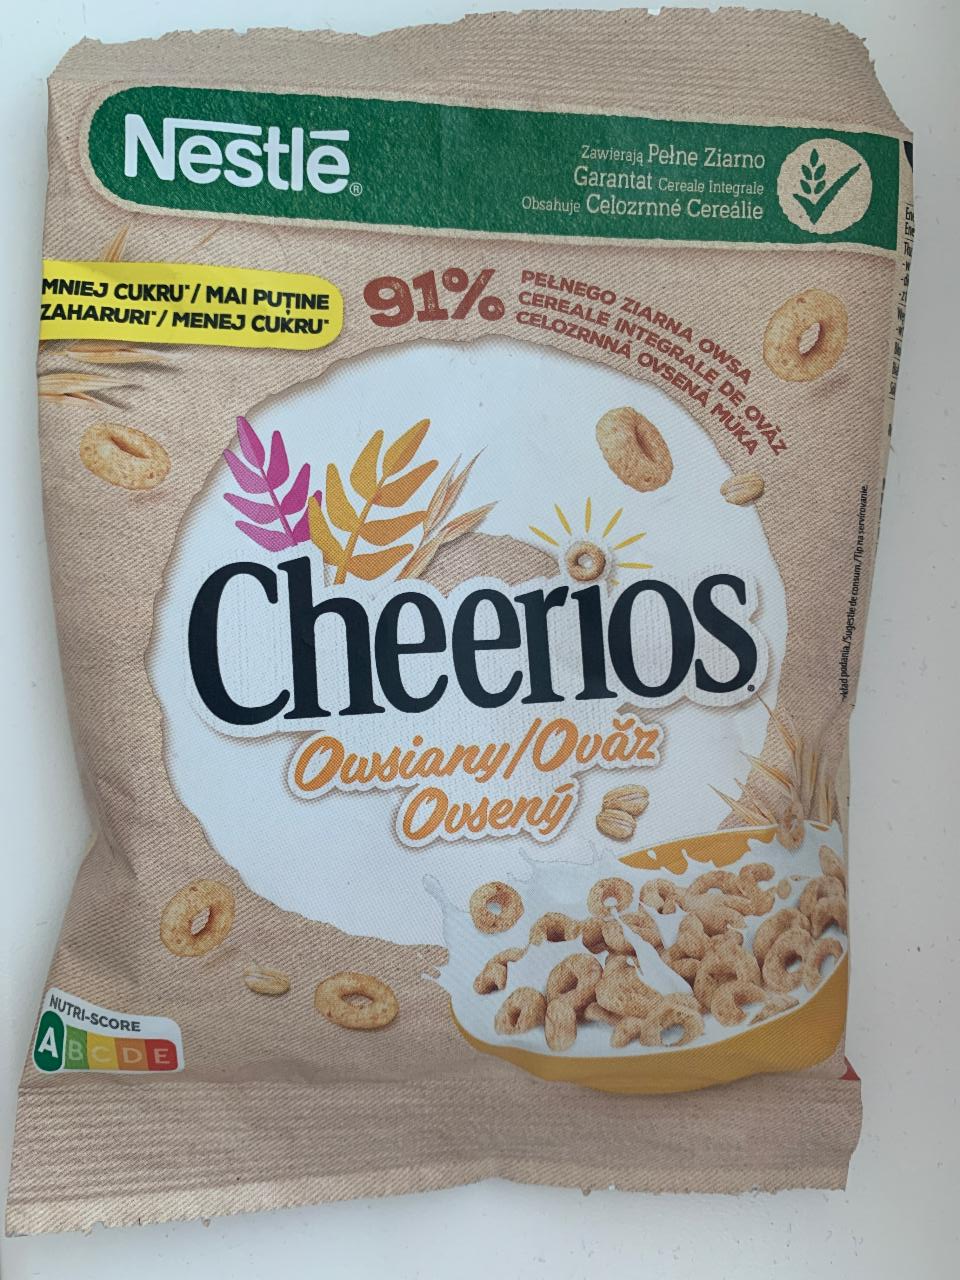 Fotografie - Cheerios oat 91% whole grain oats Nestlé